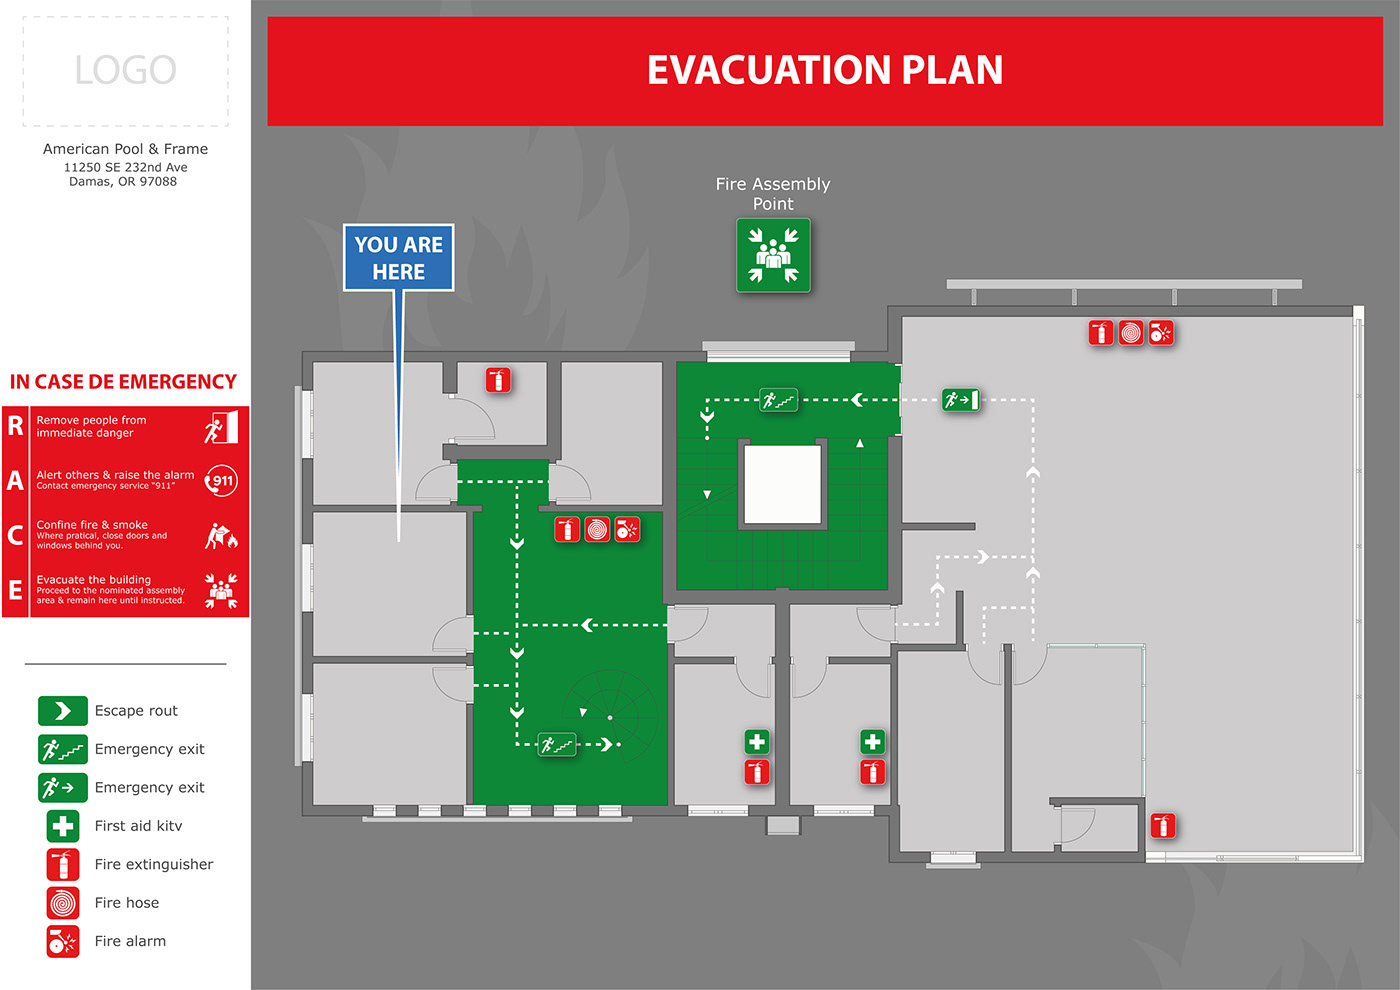 floorplan floor plan rendering emergency exit emergency escape fire planimetria evacuation grundriss